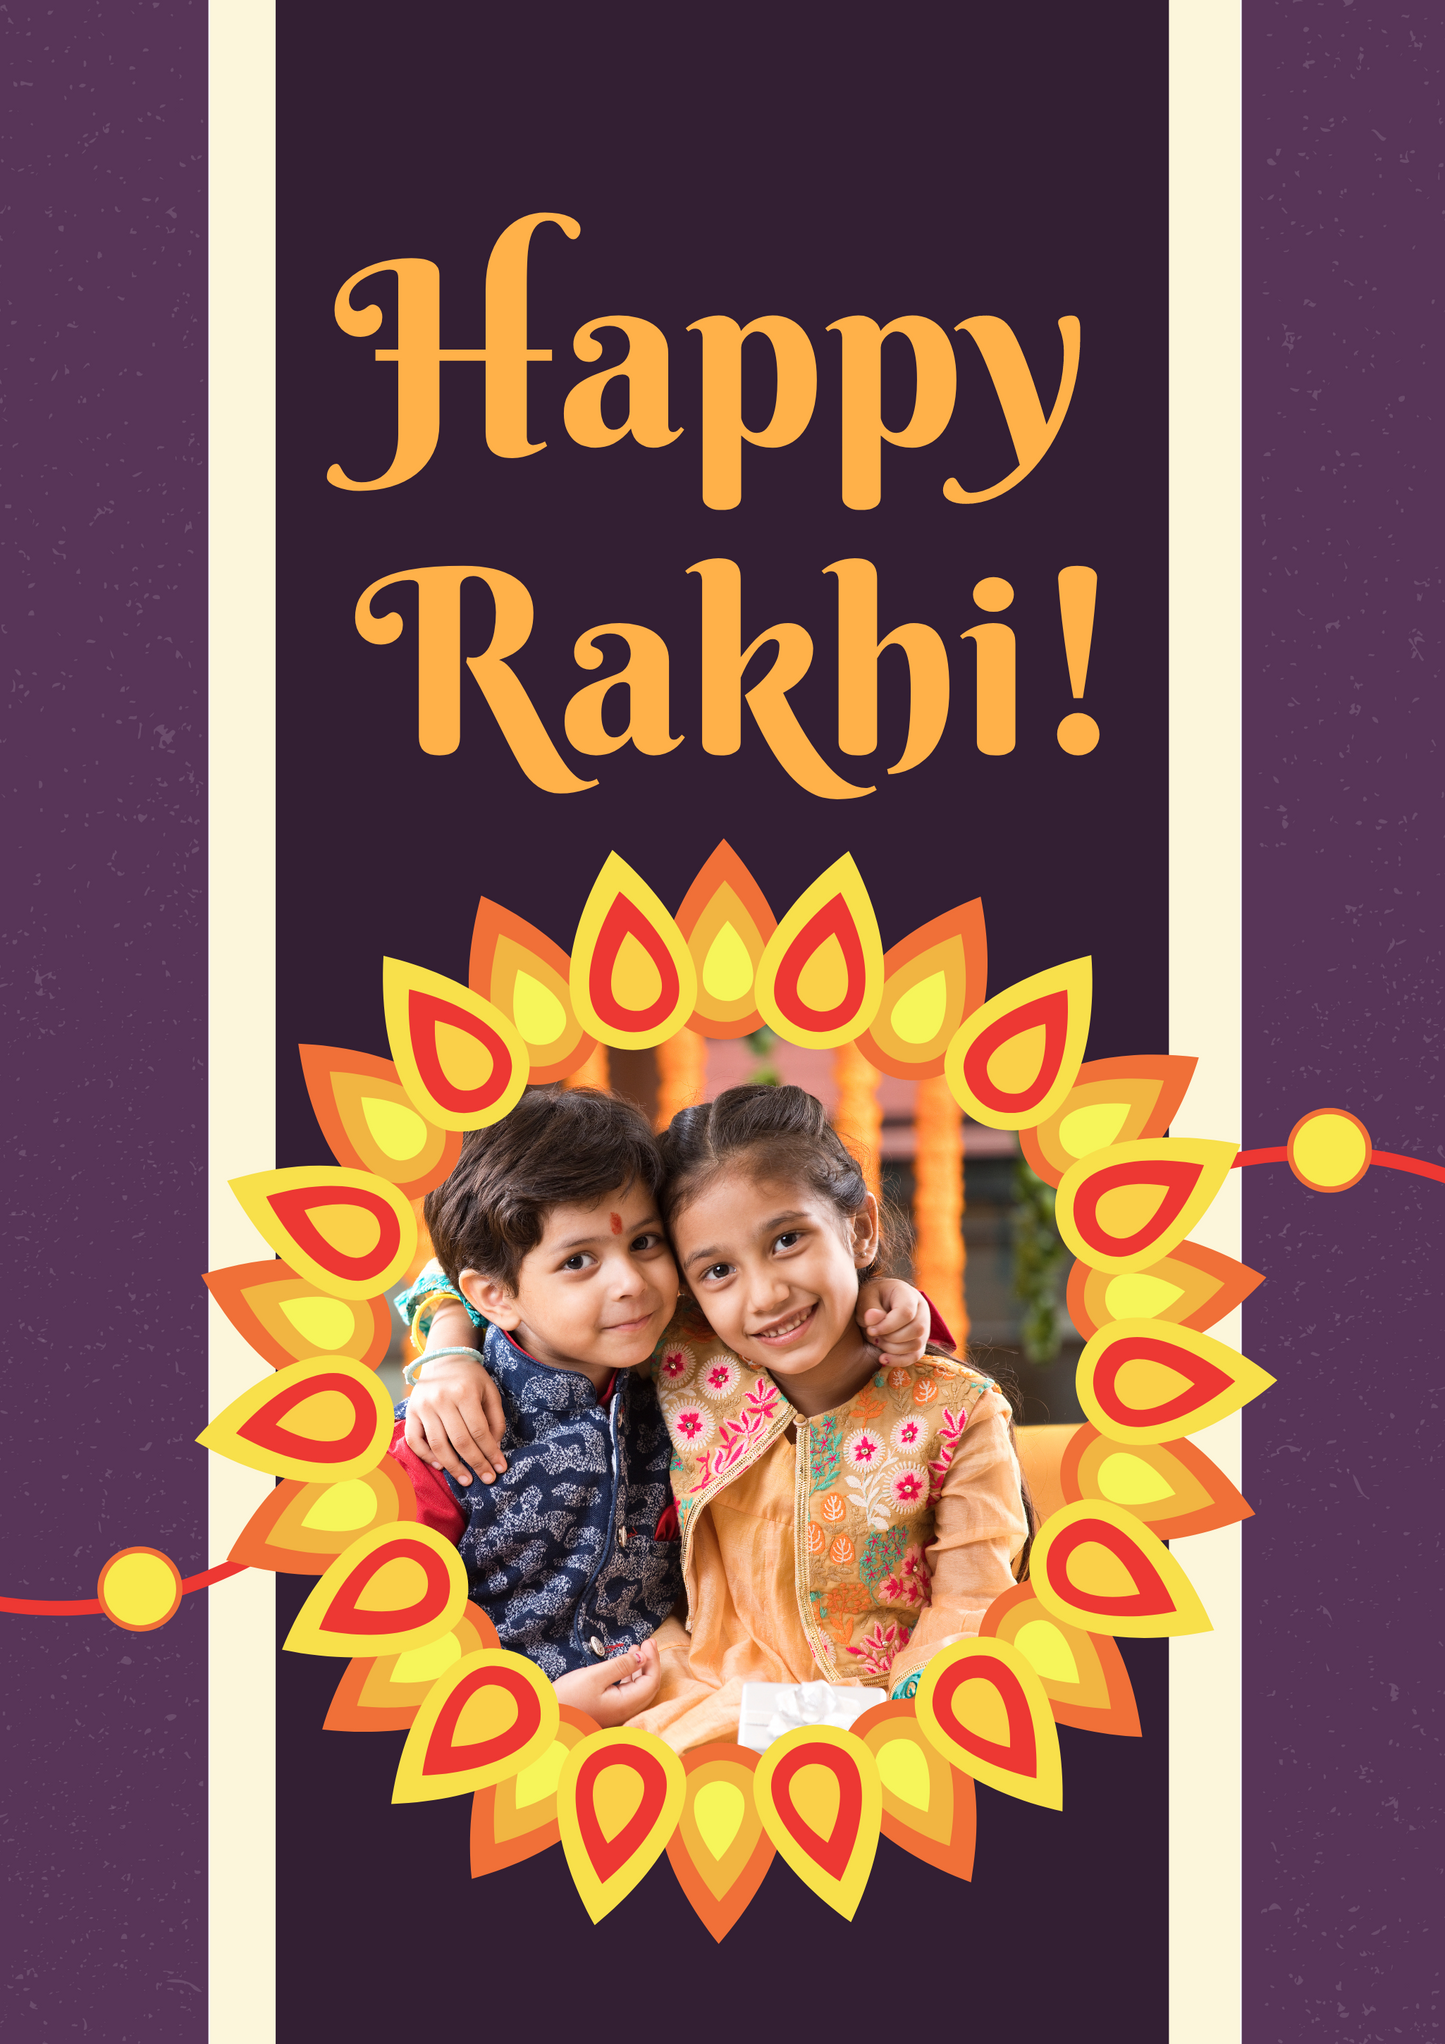 Rakhi Thread Photo Card